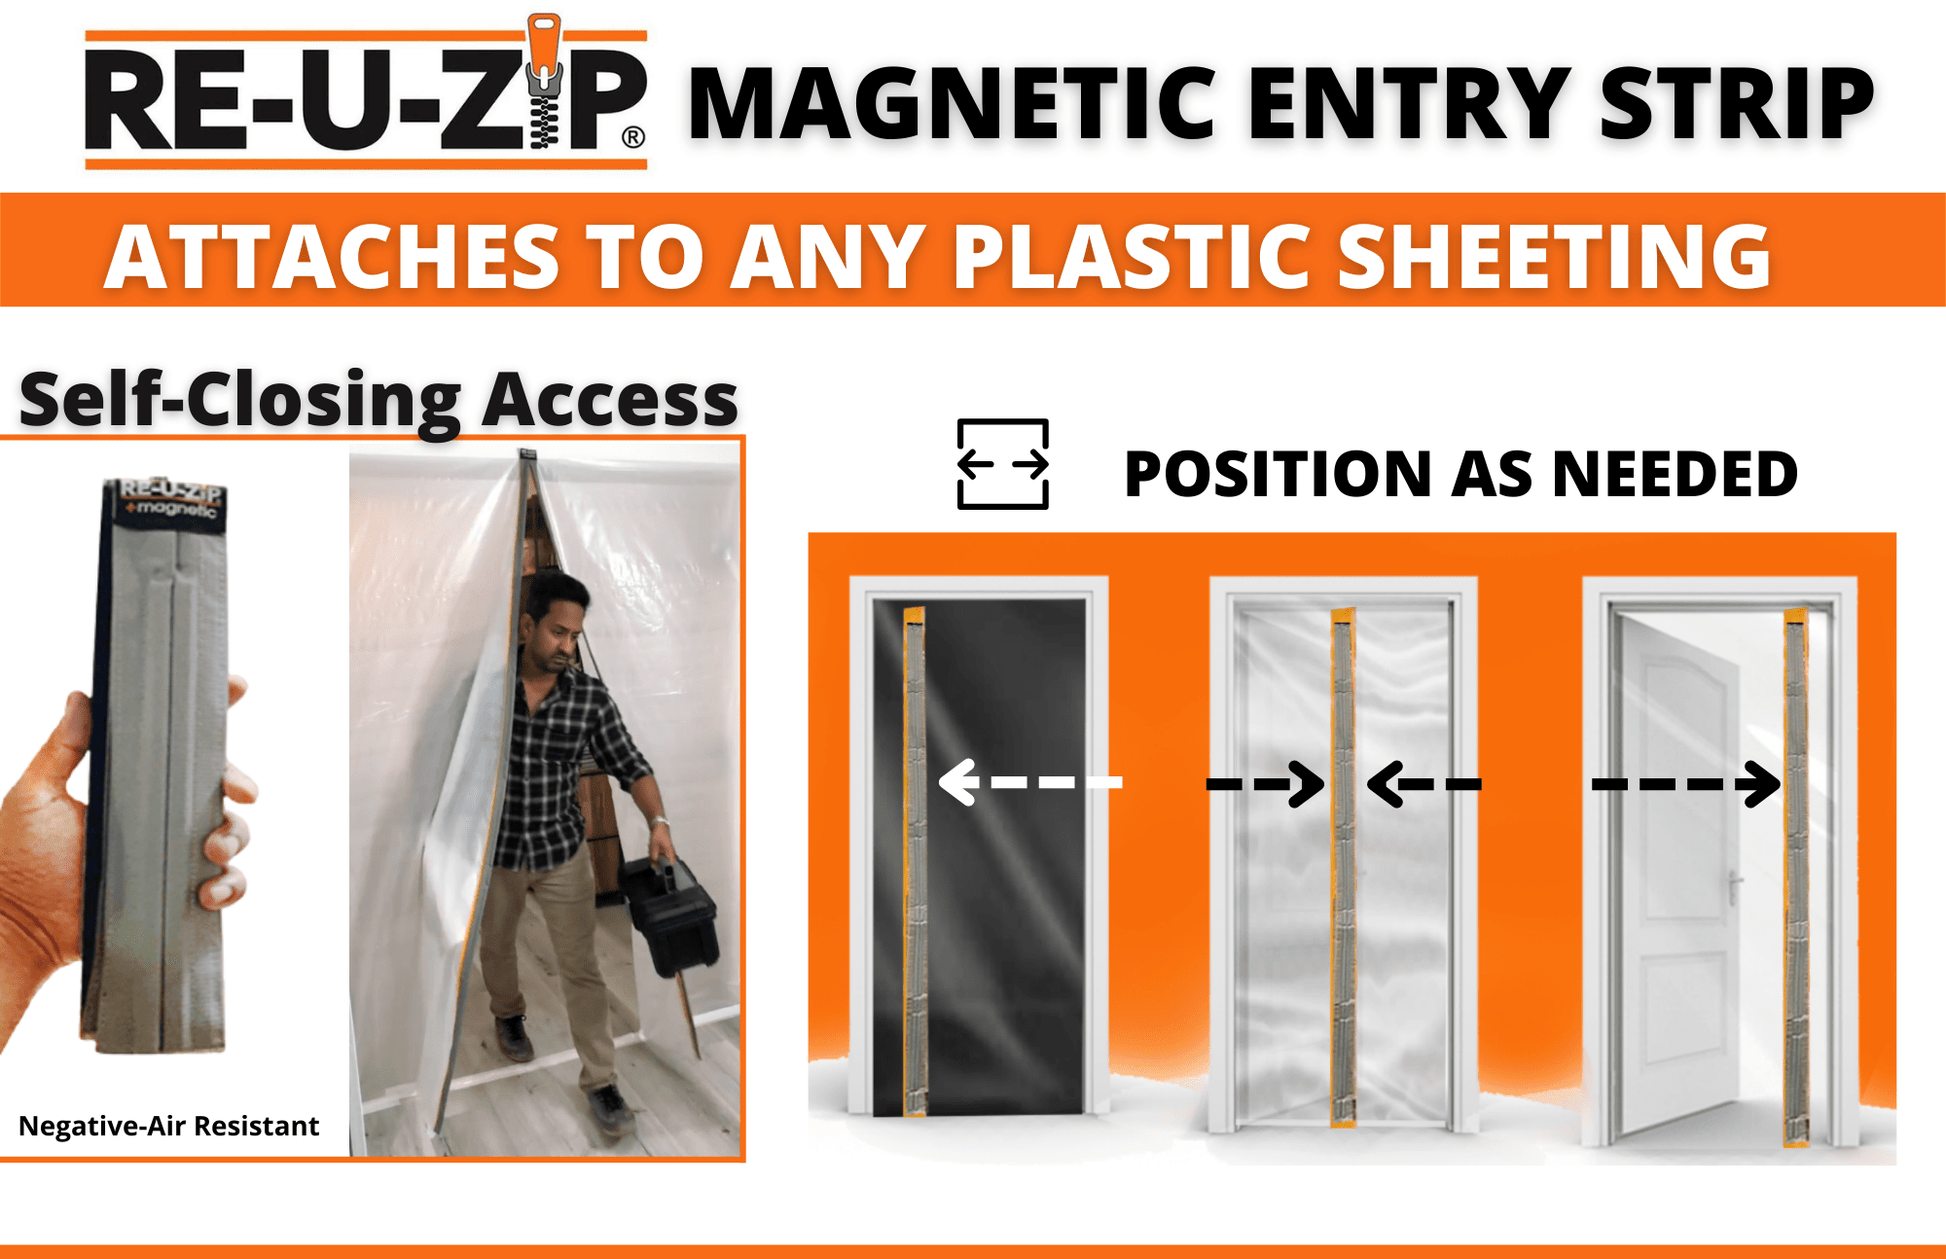 RE-U-ZIP™ INNOVATIVE DUST BARRIER SOLUTIONS RE-U-ZIP™ Reusable Magnetic Entry Strip 6-Pack Bundle (Requires Mounting Strips)